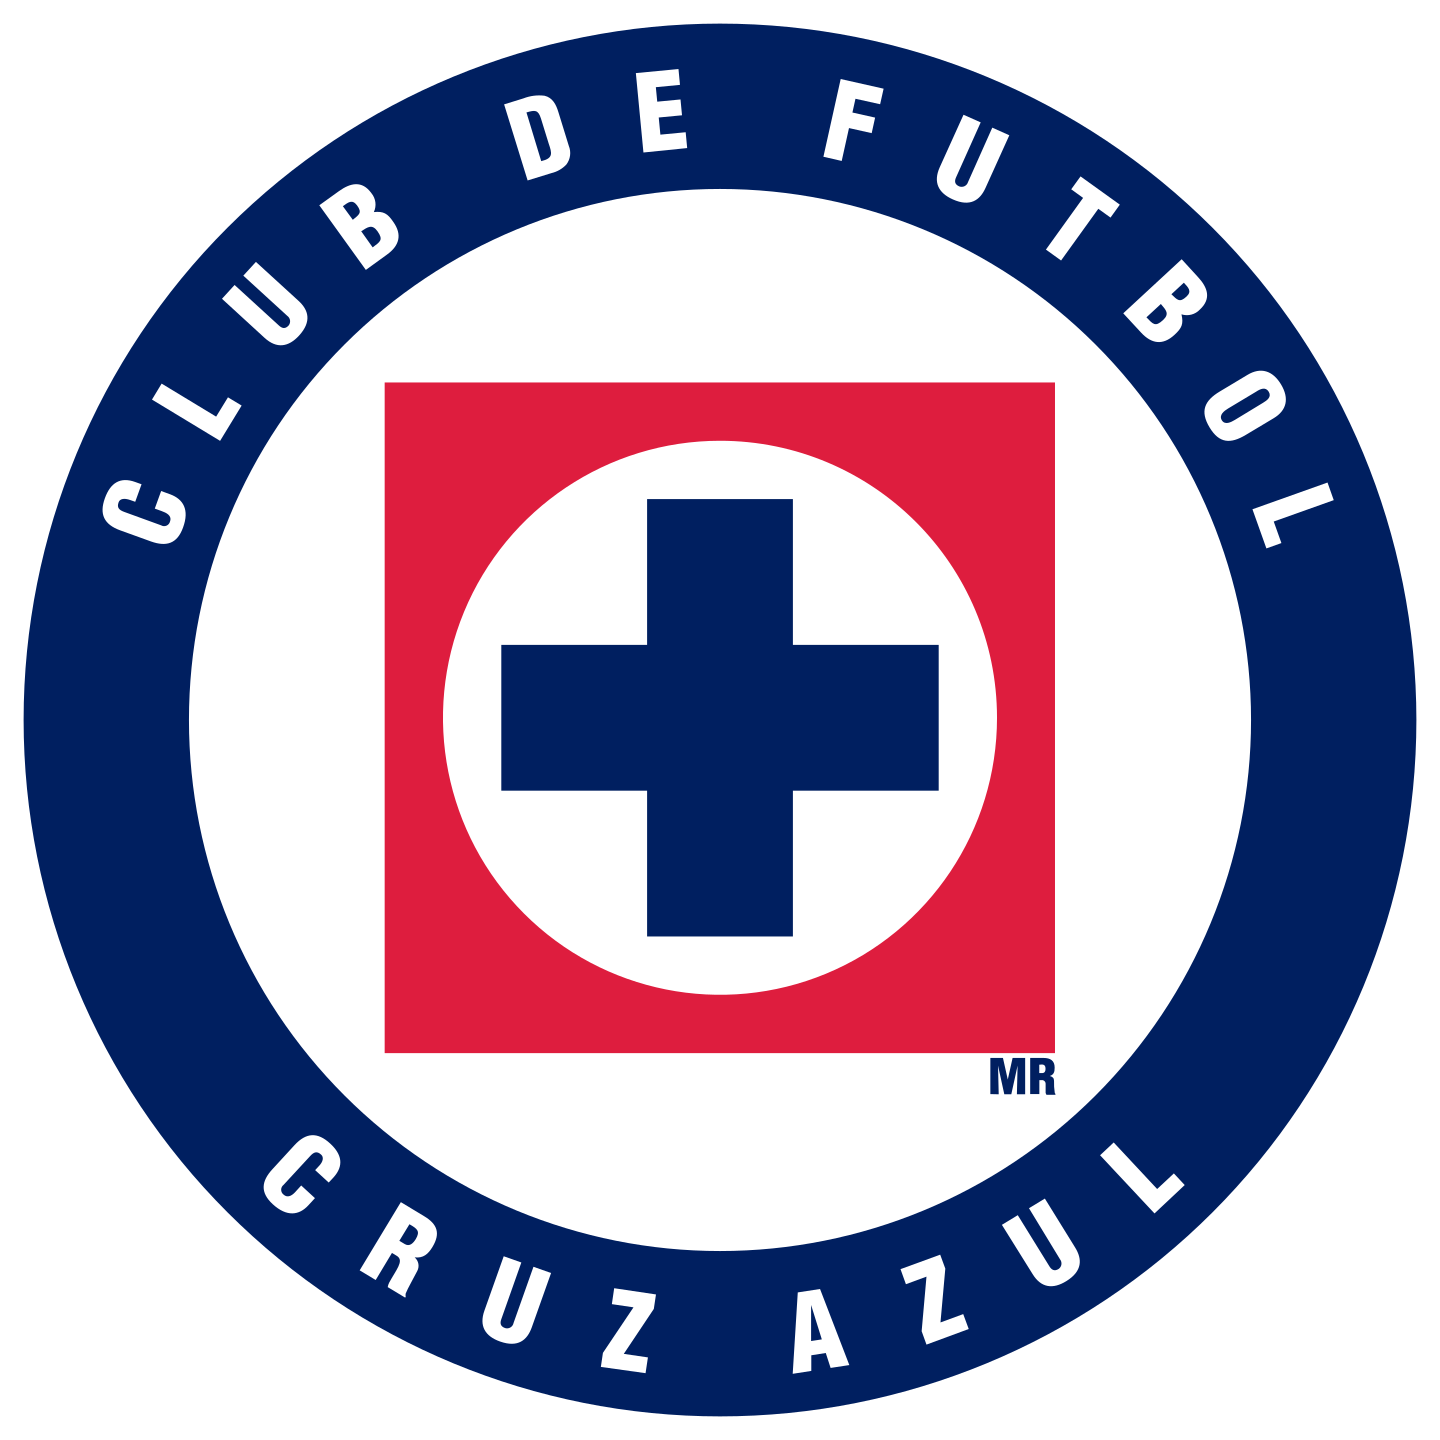 cruz azul logo 2 - Cruz Azul FC Logo